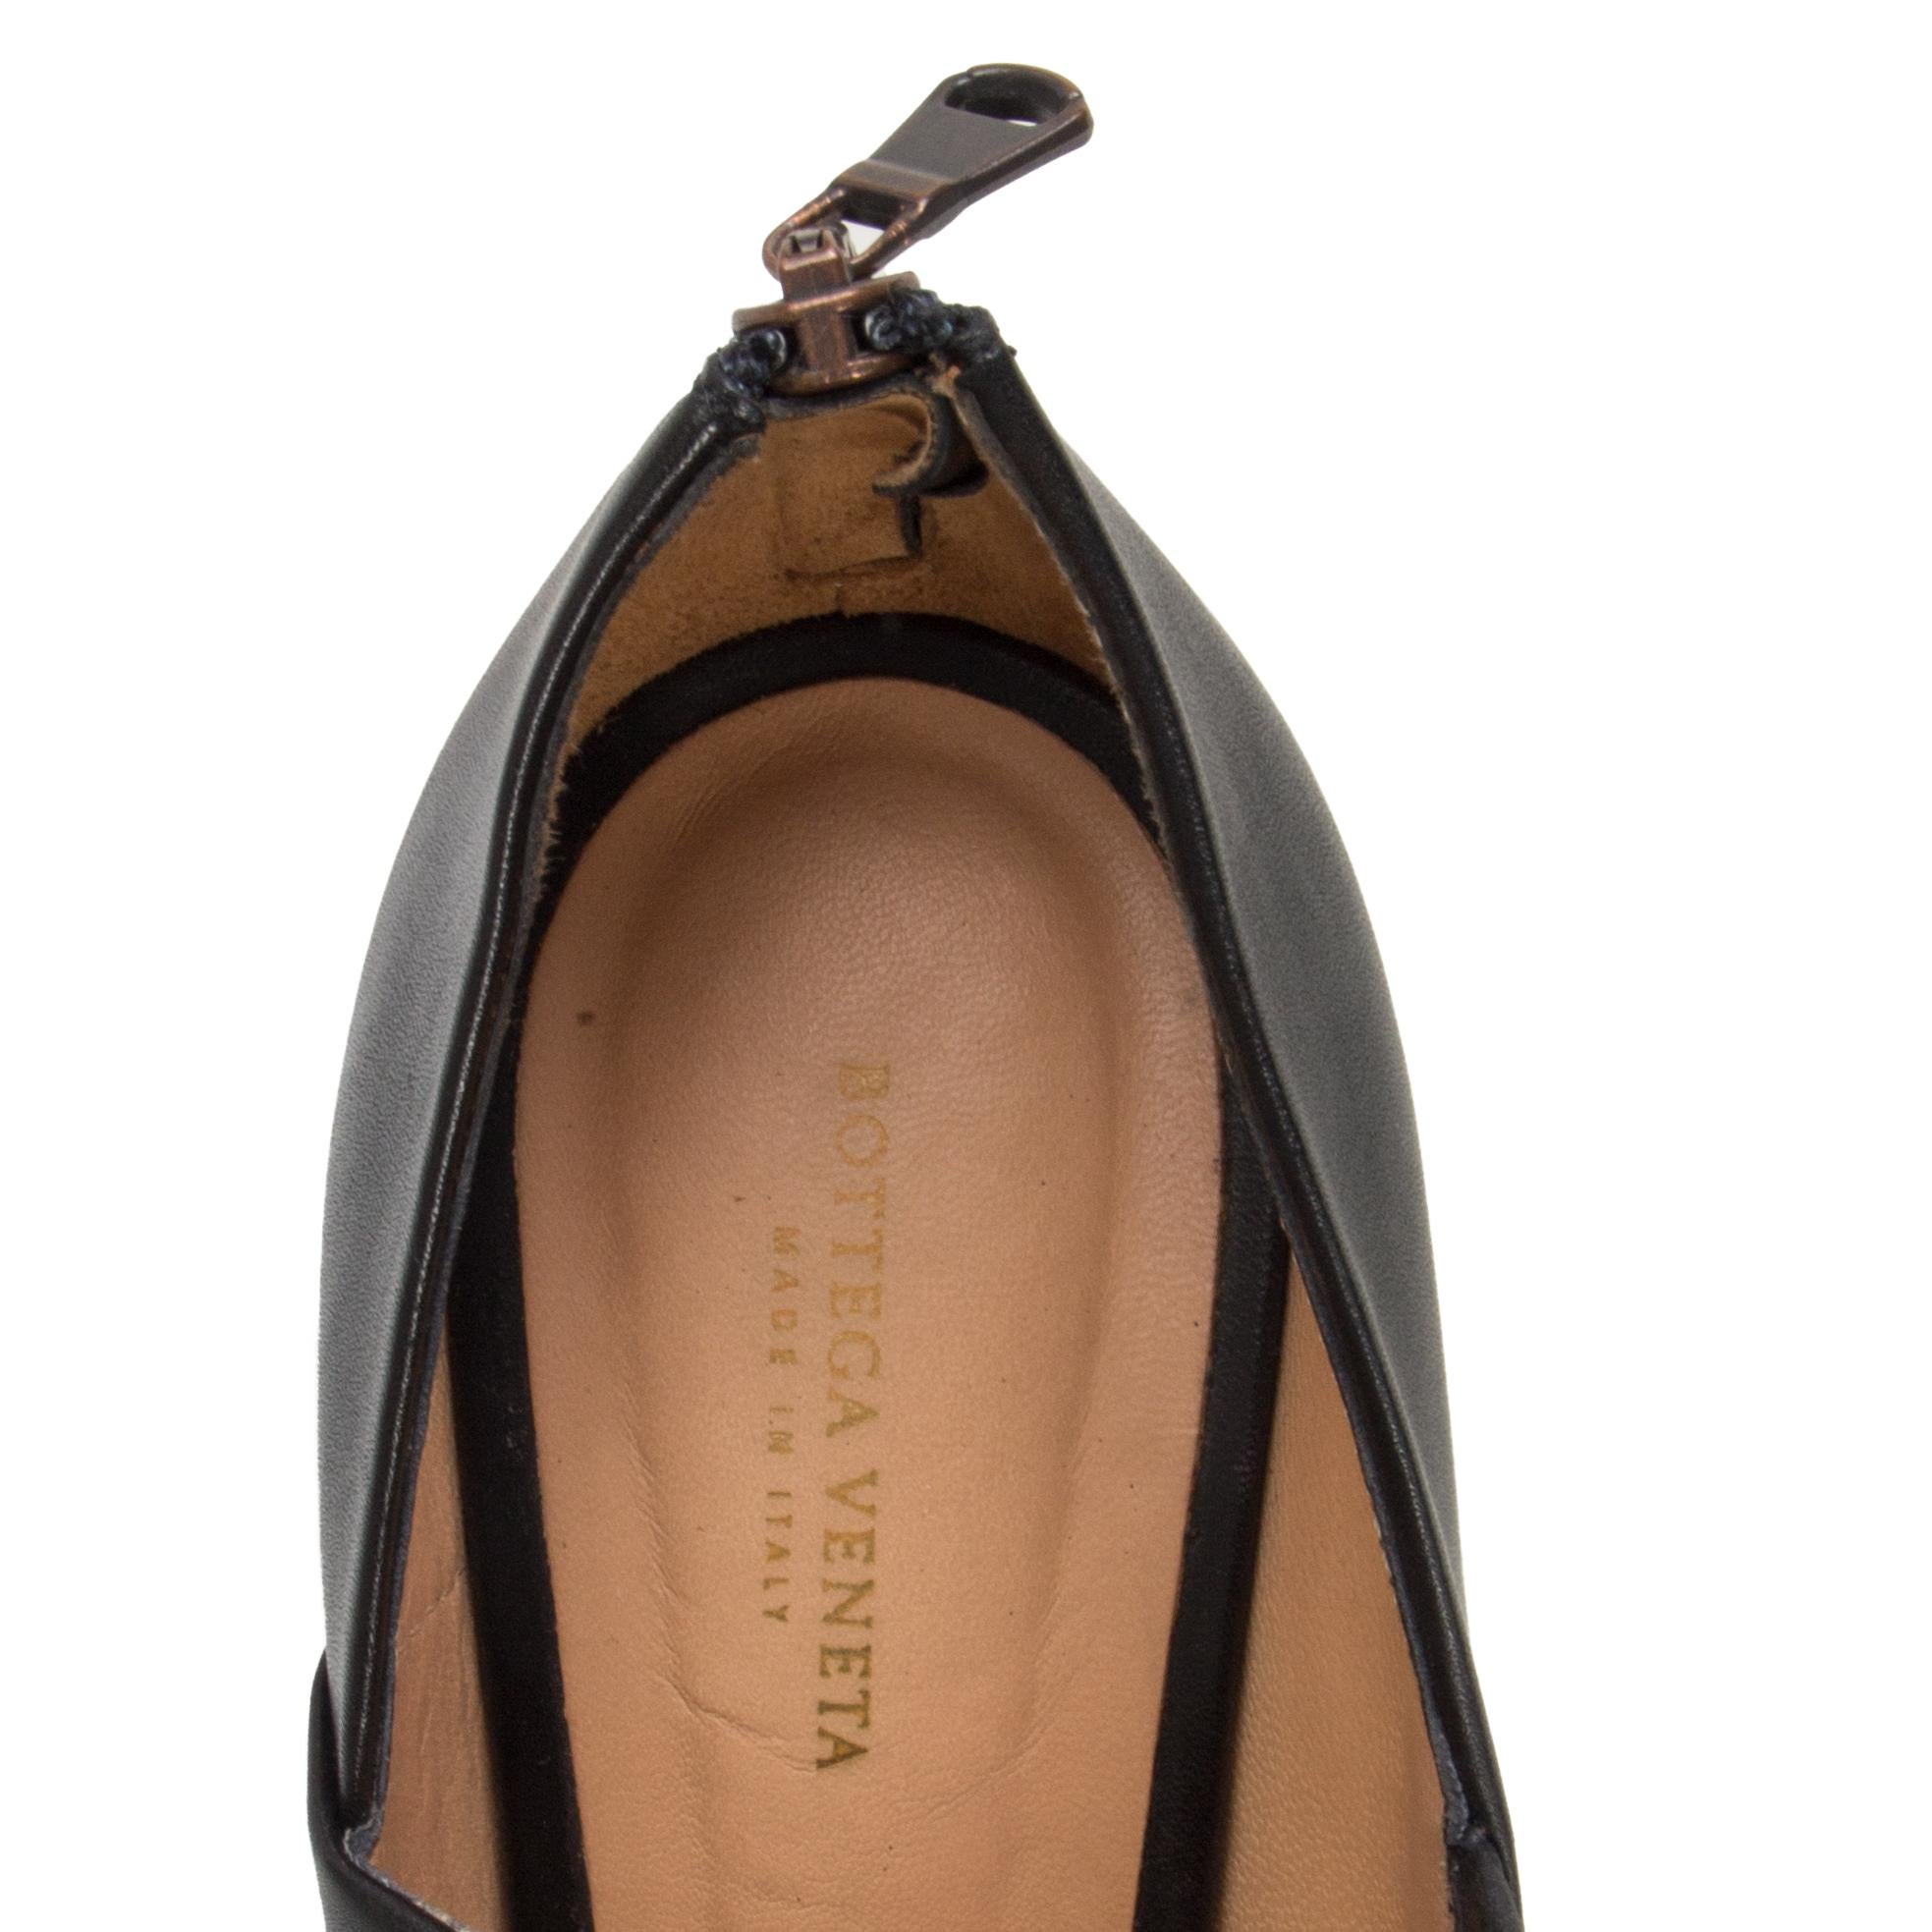 Black BOTTEGA VENETA black leather PLATFORM Sandals Shoes 38